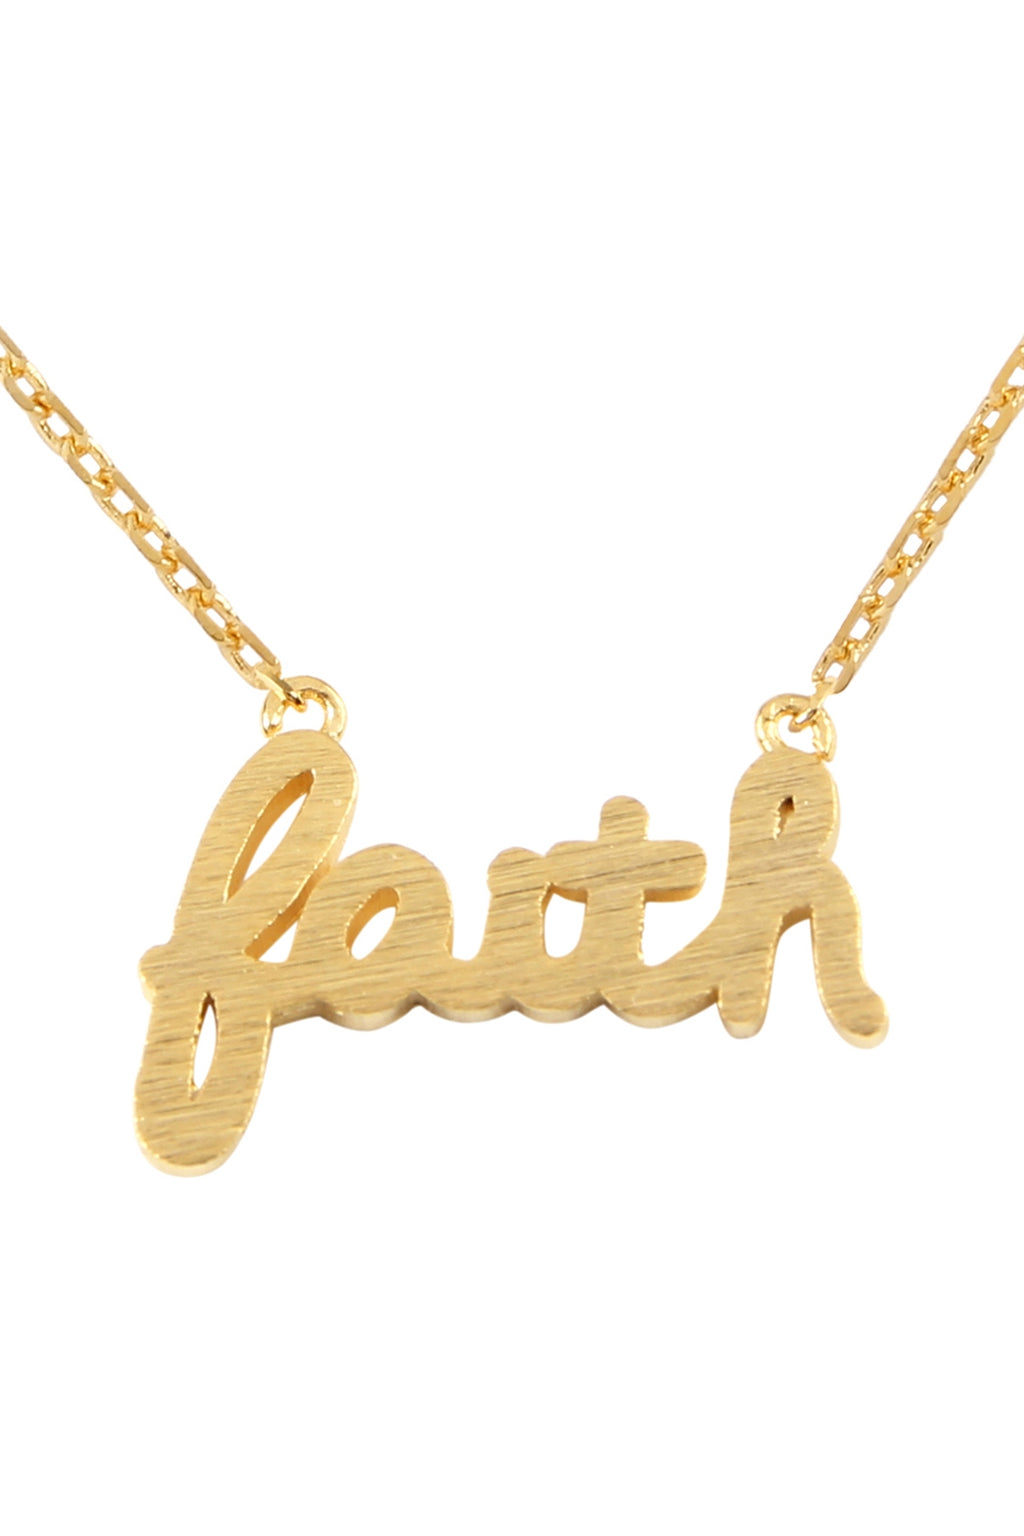 Faith Cast Pendant Necklace Gold - Pack of 6